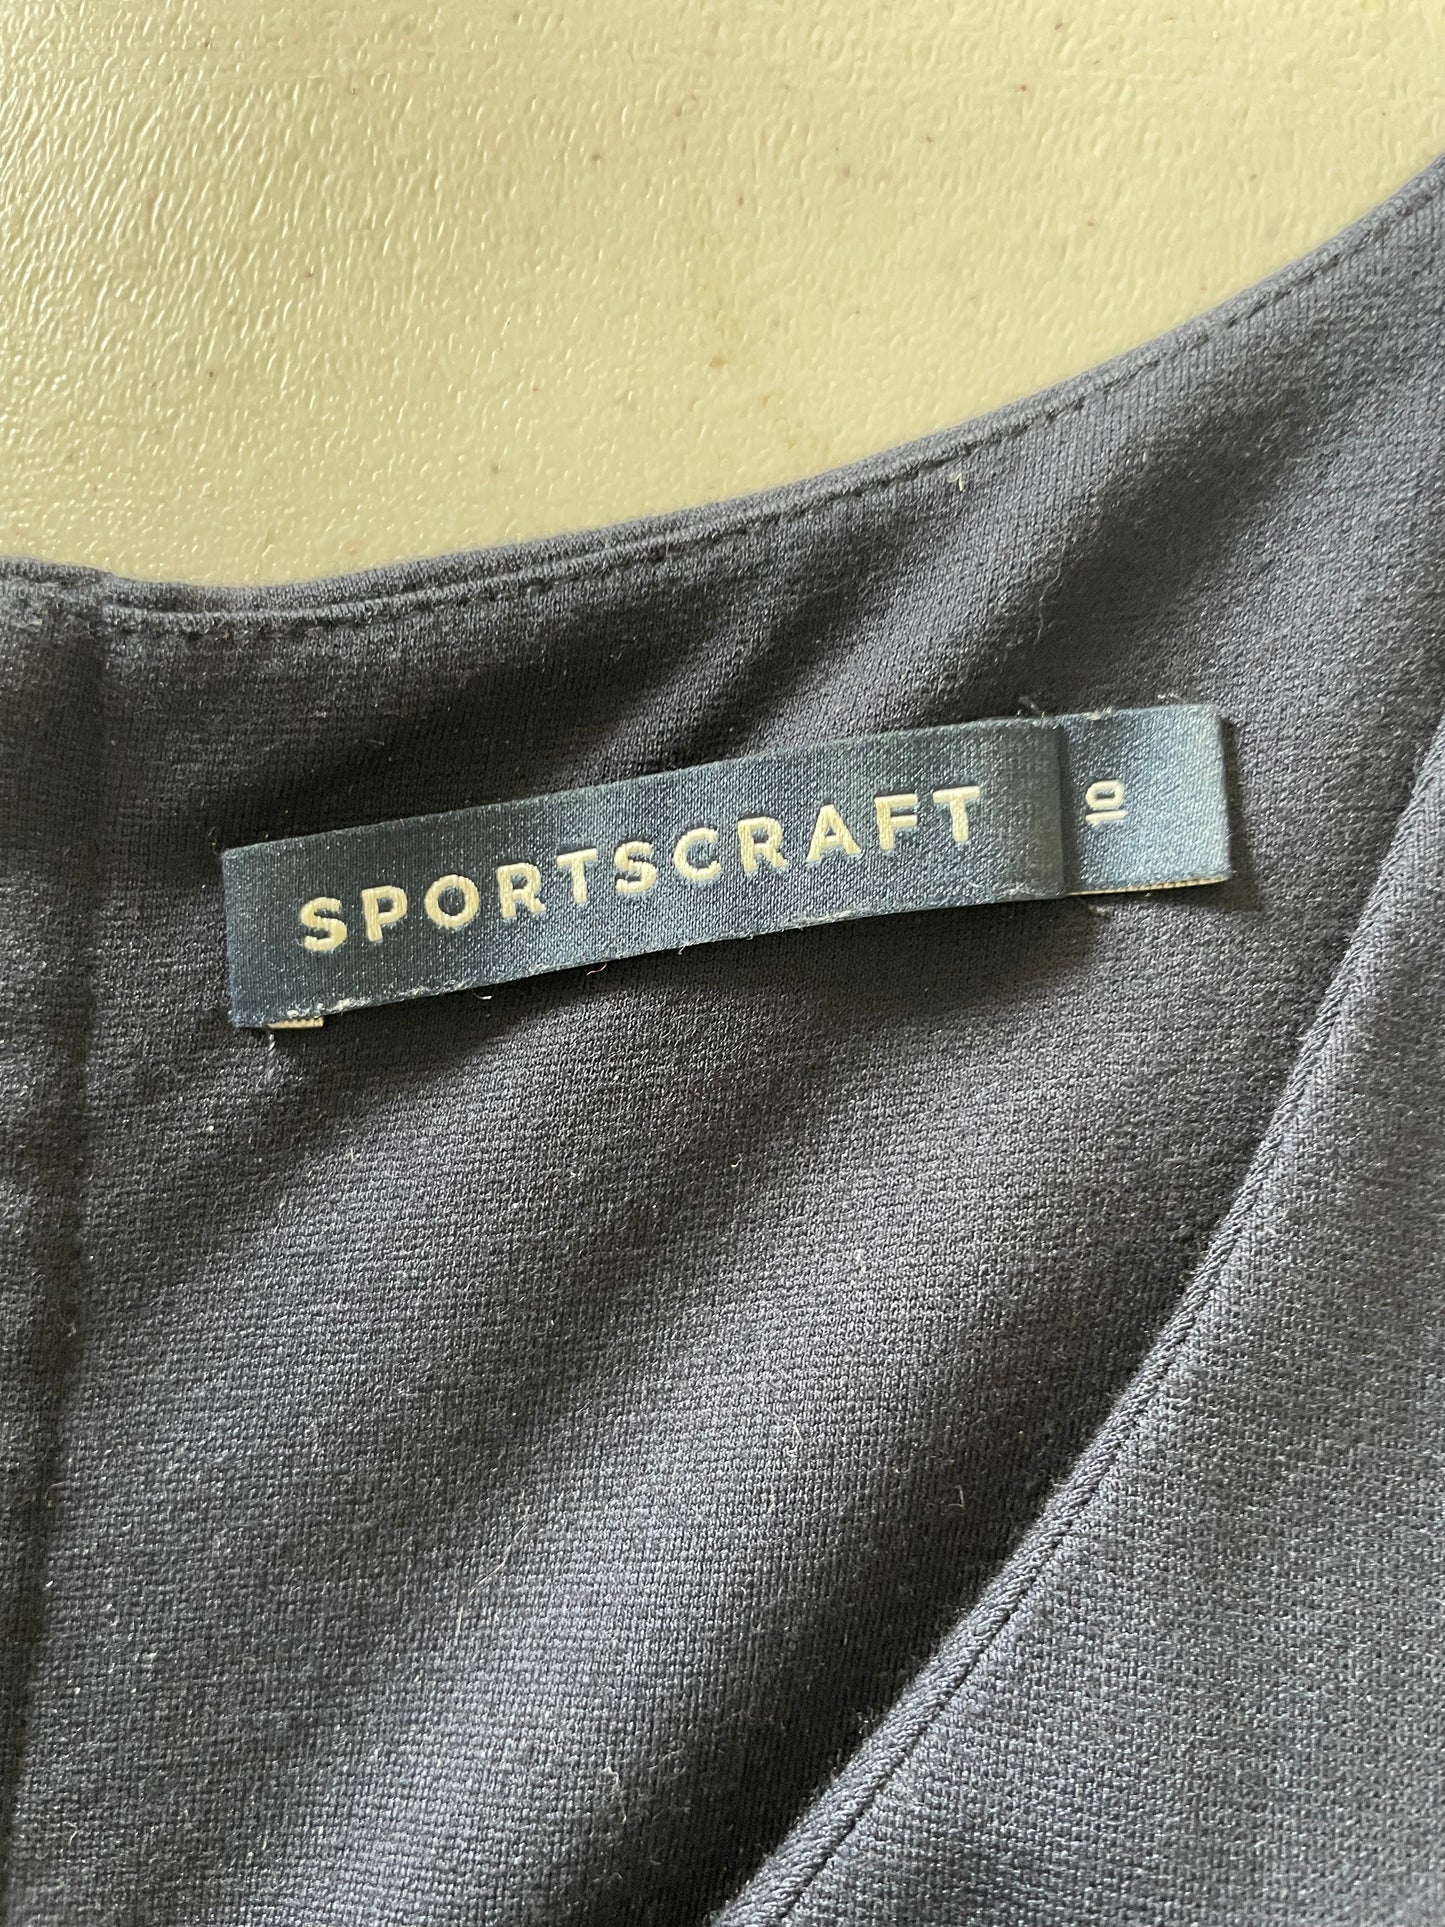 Size 20, Women's Clothing, Sportscraft